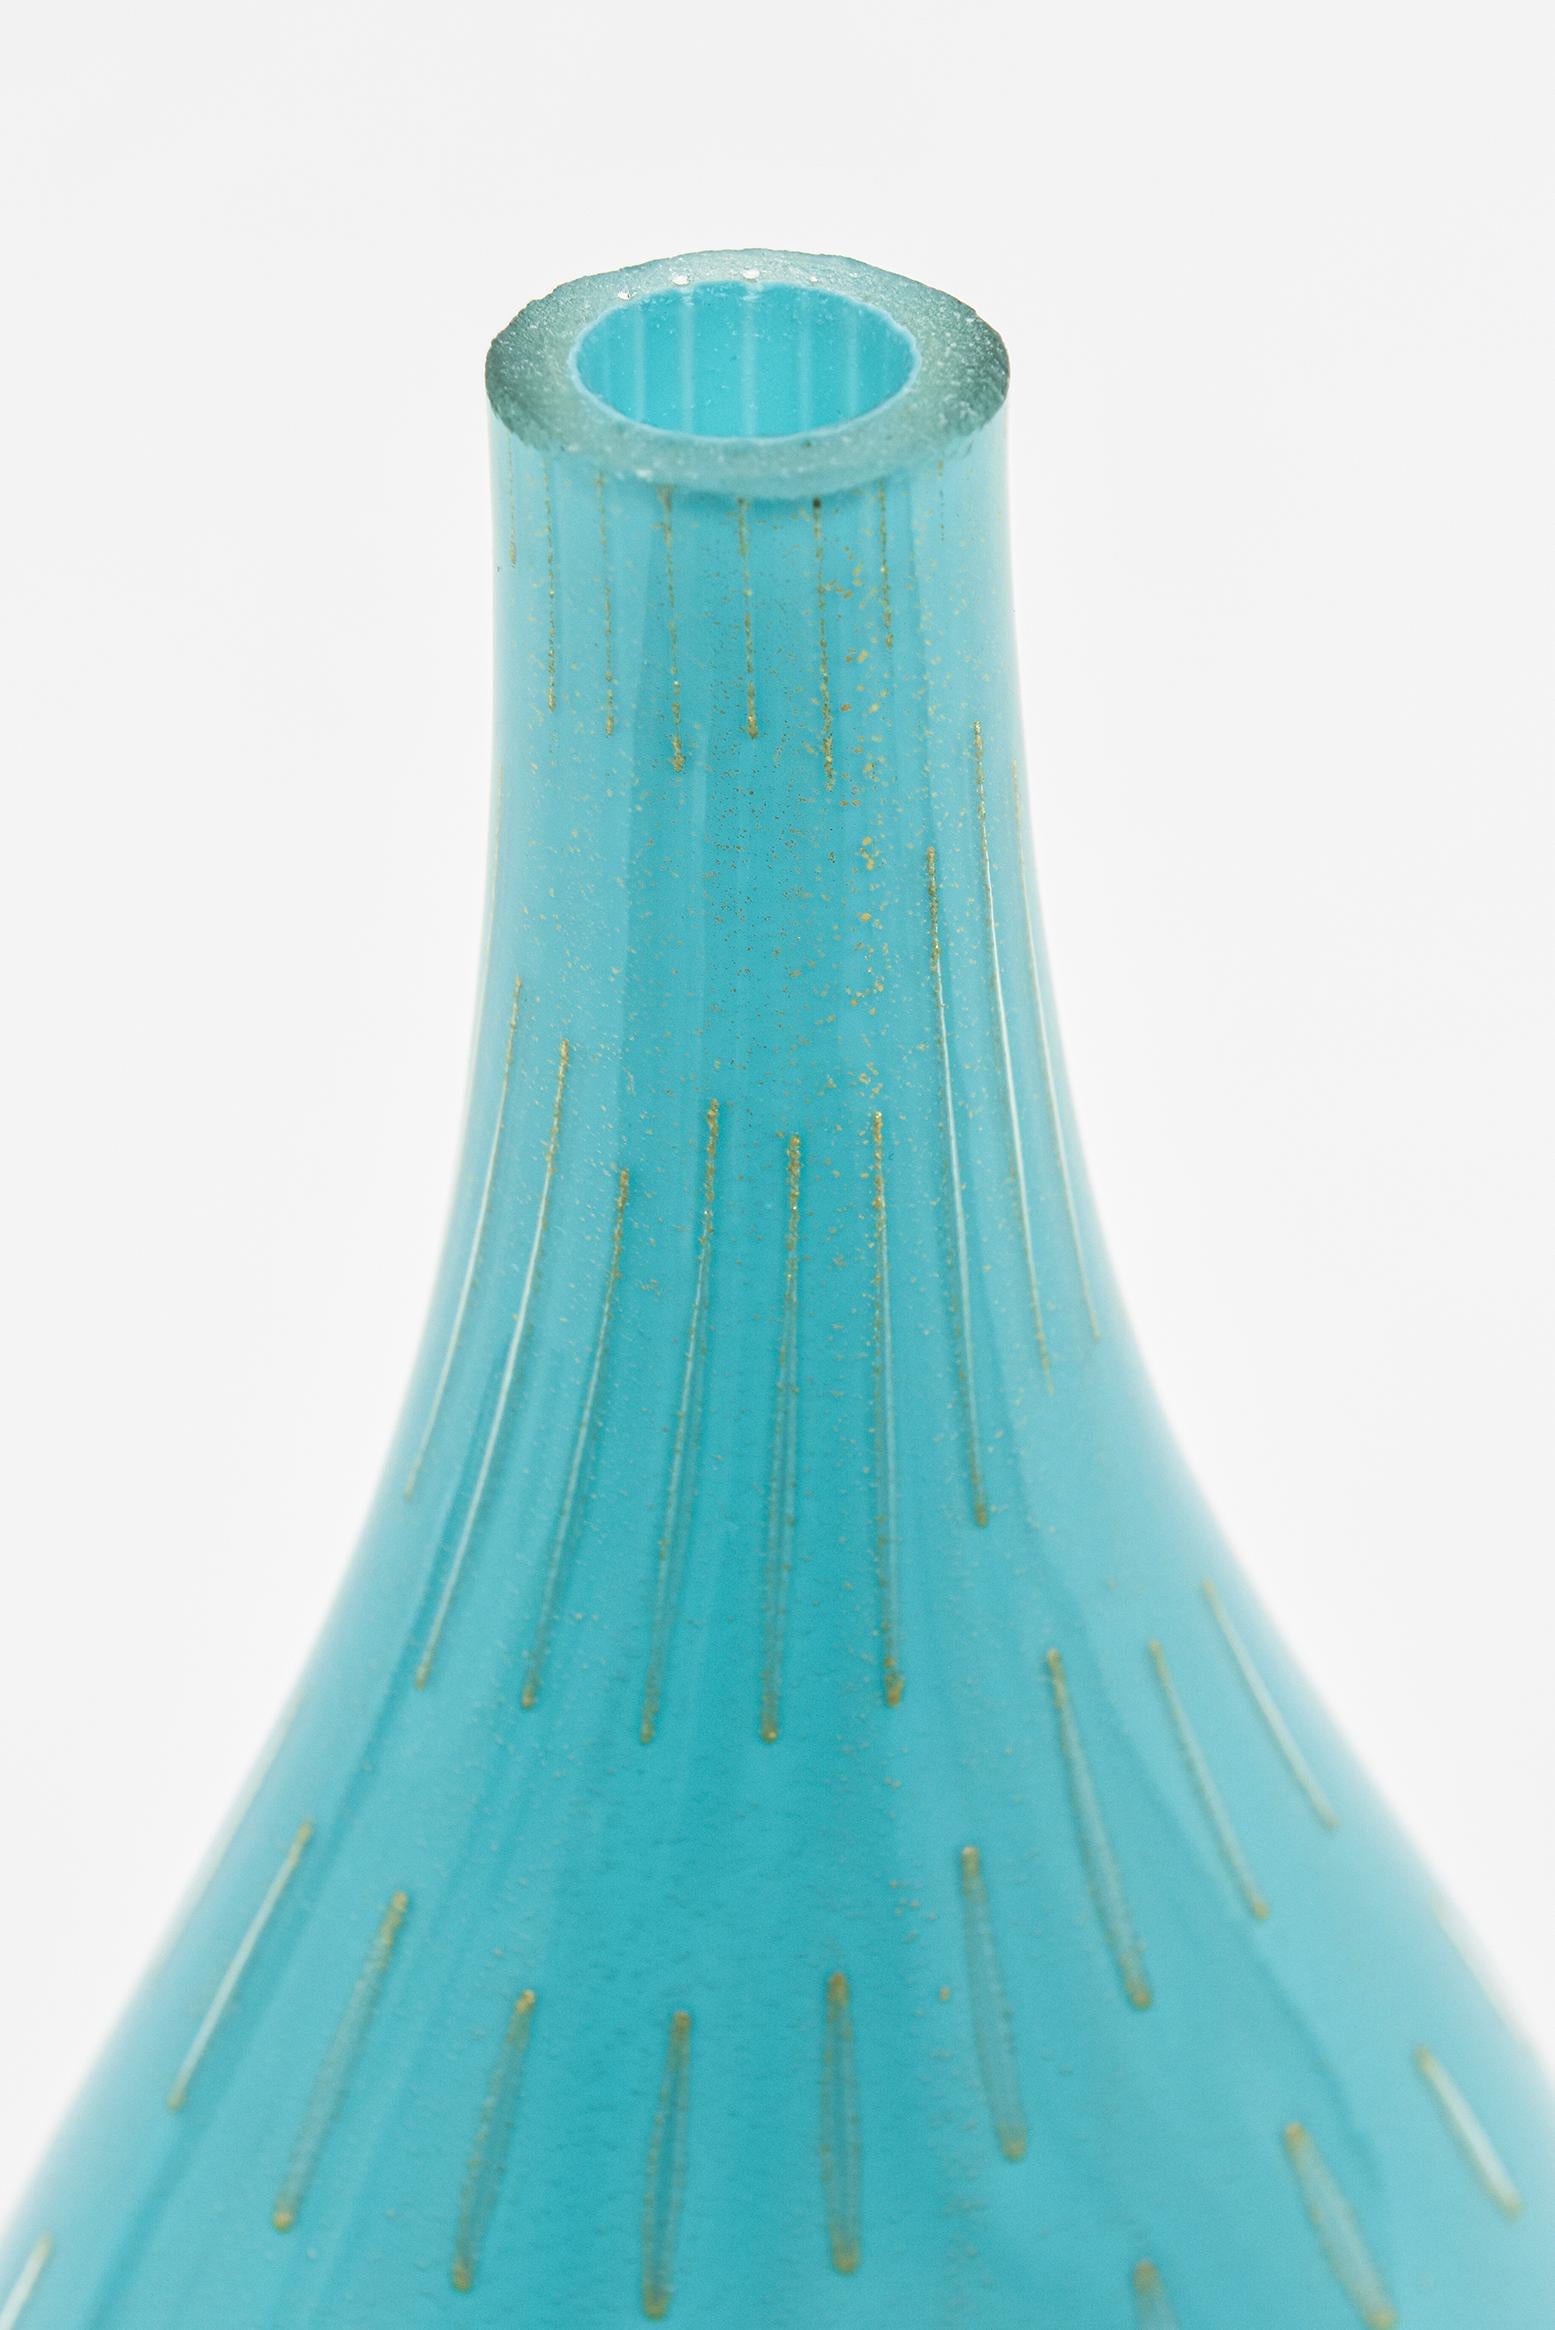 Mid-Century Modern Vintage Barovier&Toso Murano Turquoise Glass Vessel Bottle With Gold Droplets (Bouteille en verre turquoise avec des gouttes d'or) en vente